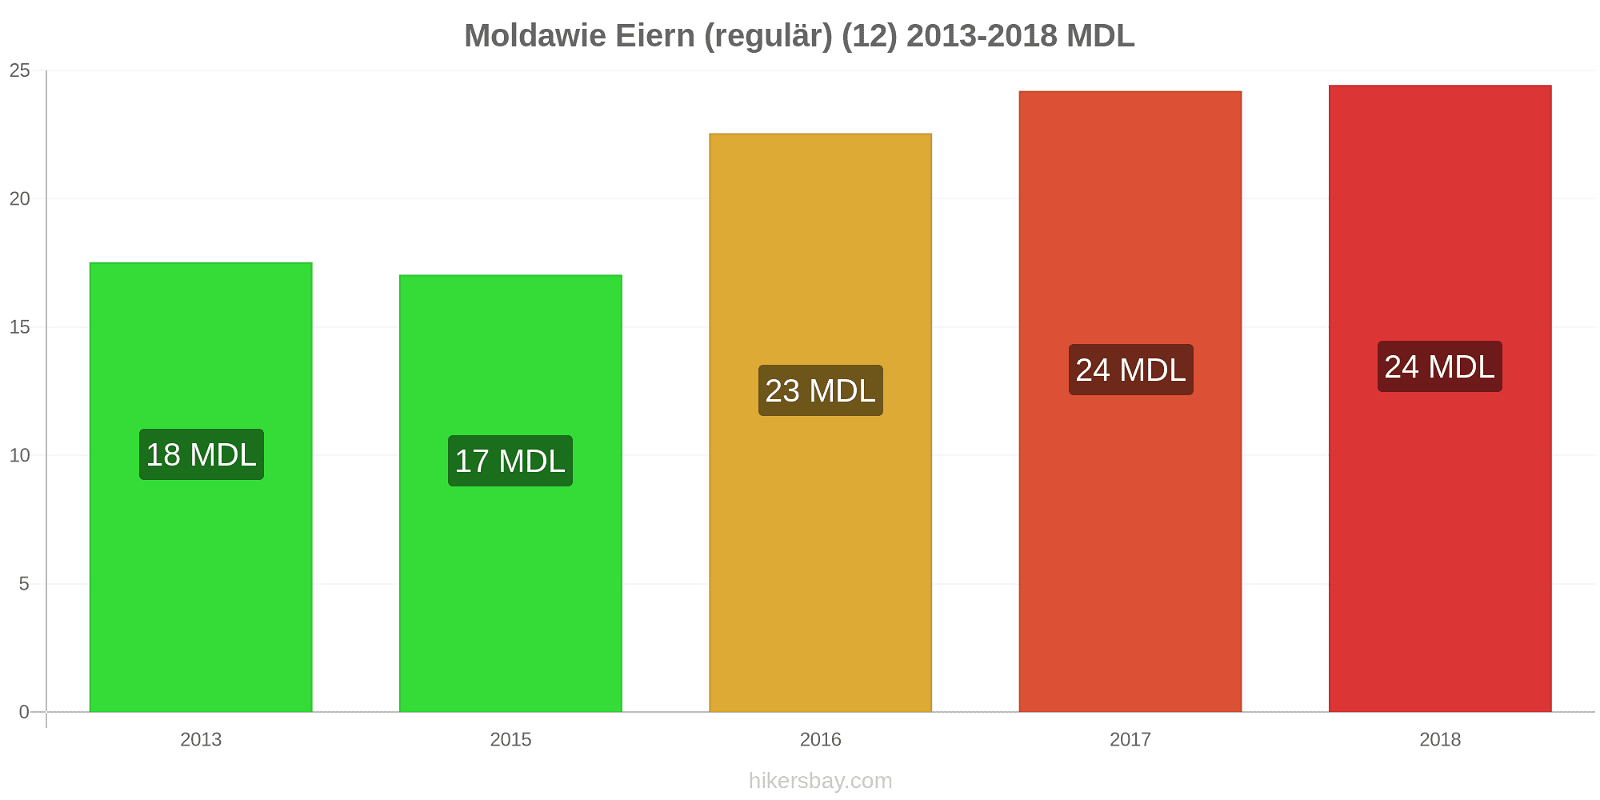 Moldawie Preisänderungen Eier (regelmäßig) (12) hikersbay.com